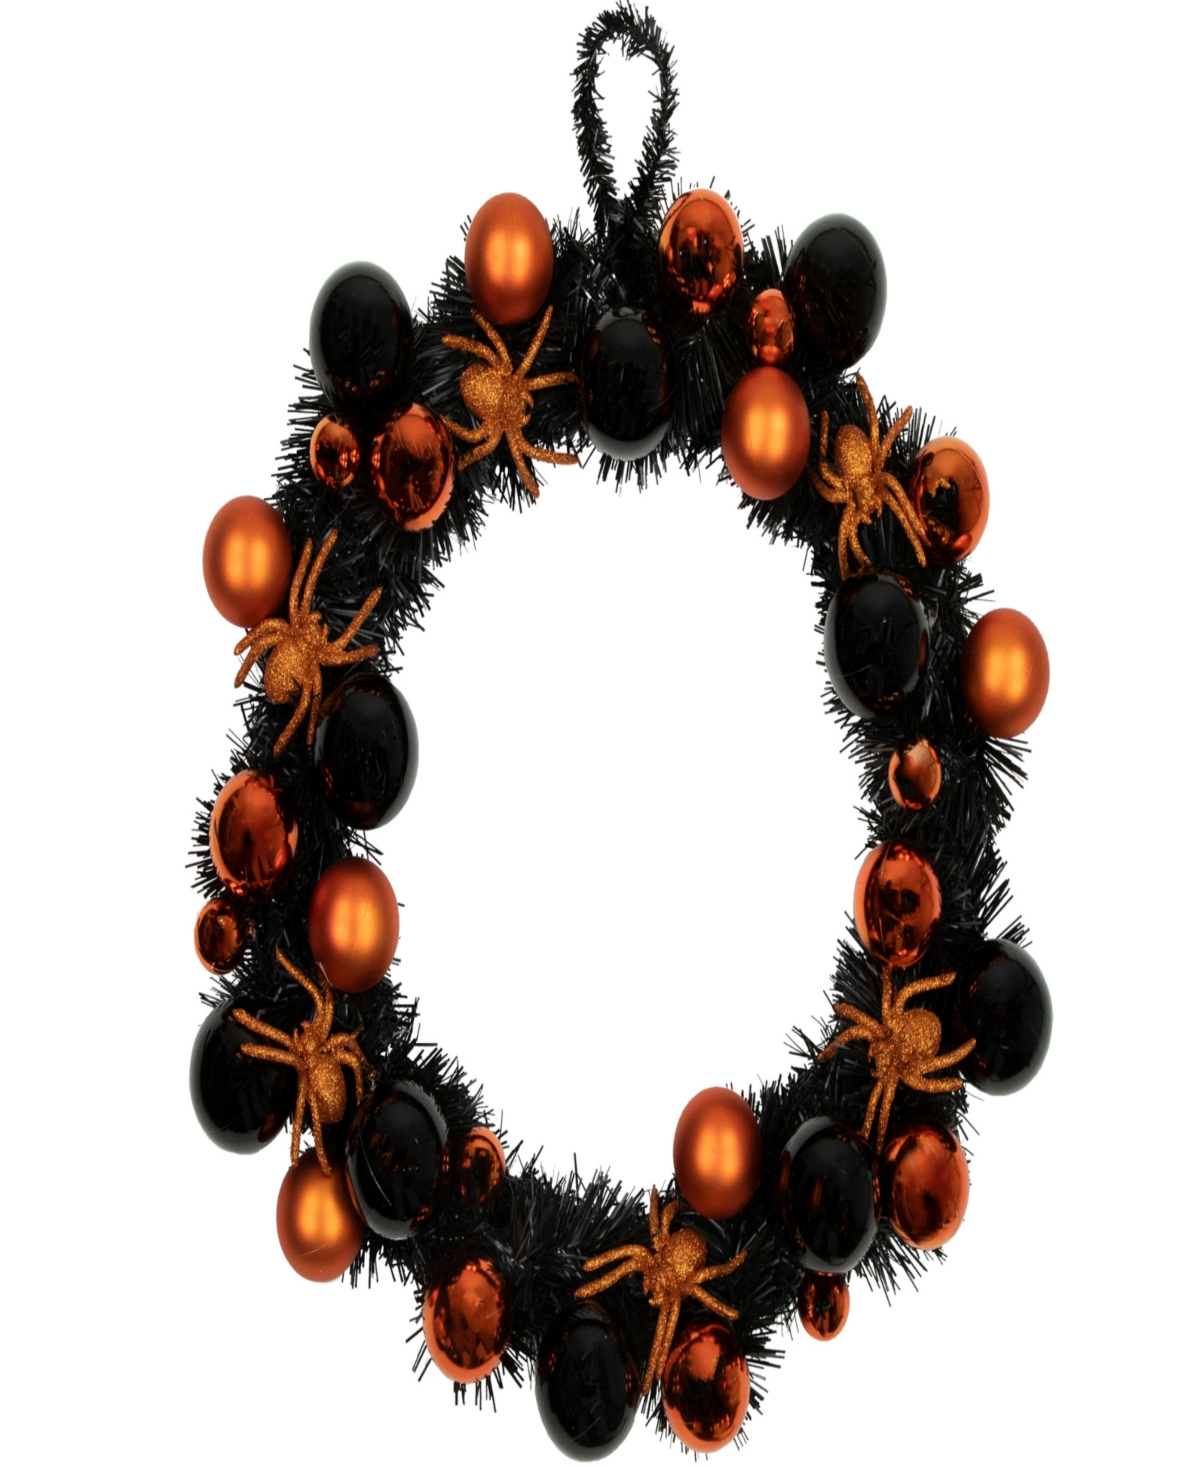 Spiders and Ornaments Halloween Wreath, 18" Unlit - Black